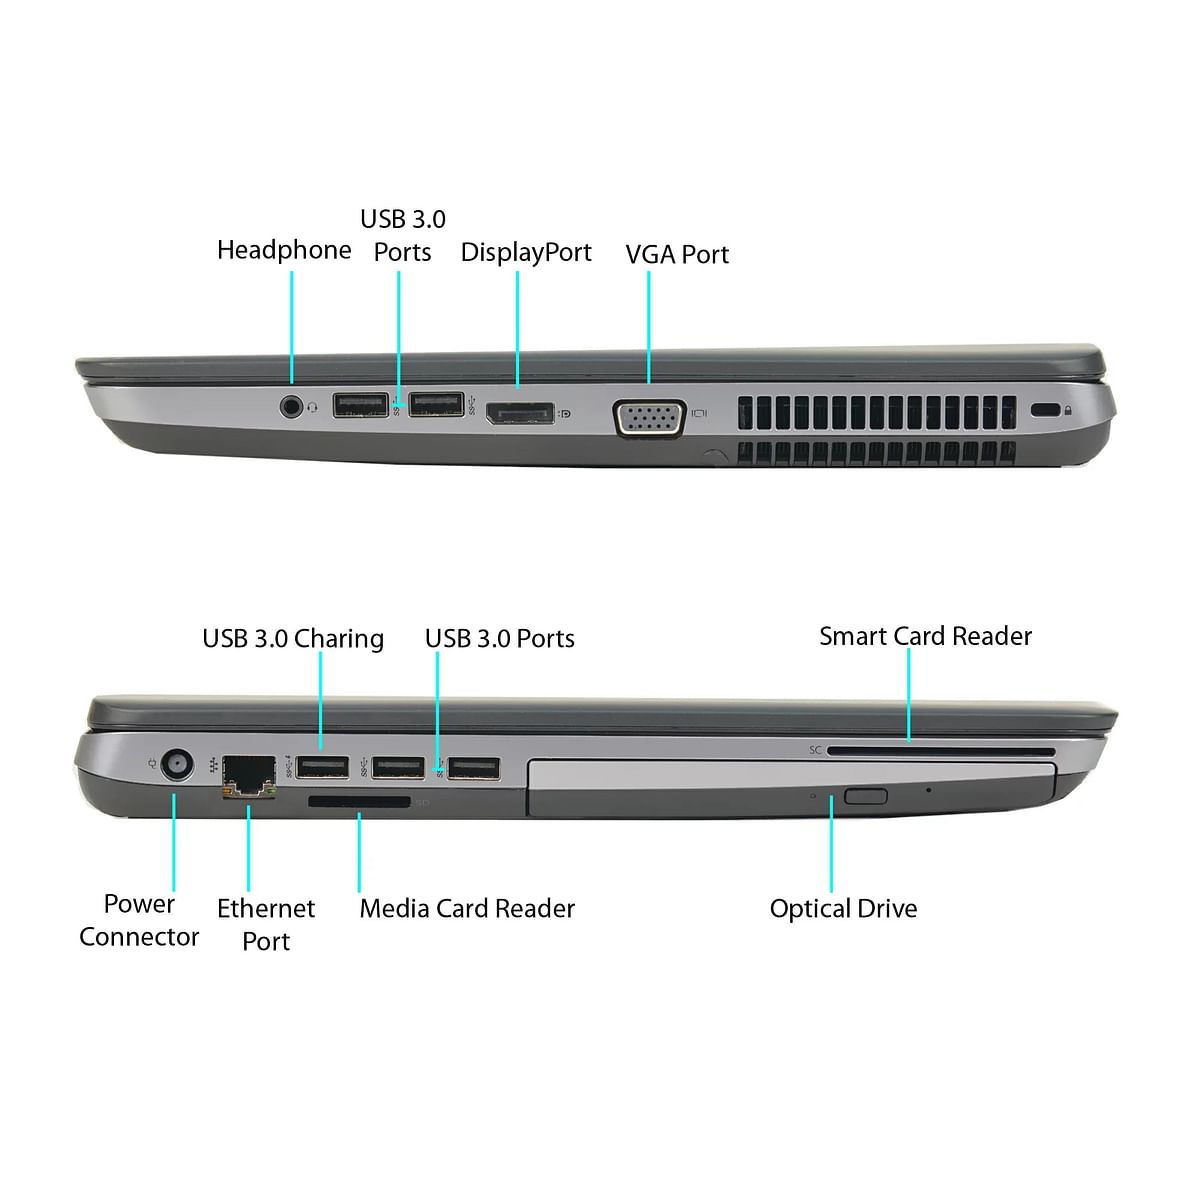 HP Probook 640 G1- 4th Gen Core i5، 8GB RAM، 256GB SSD - شاشة غير عاكسة 14 بوصة ، DVD Super Multi Drive ، USB 3.0 ، Windows 10 Pro